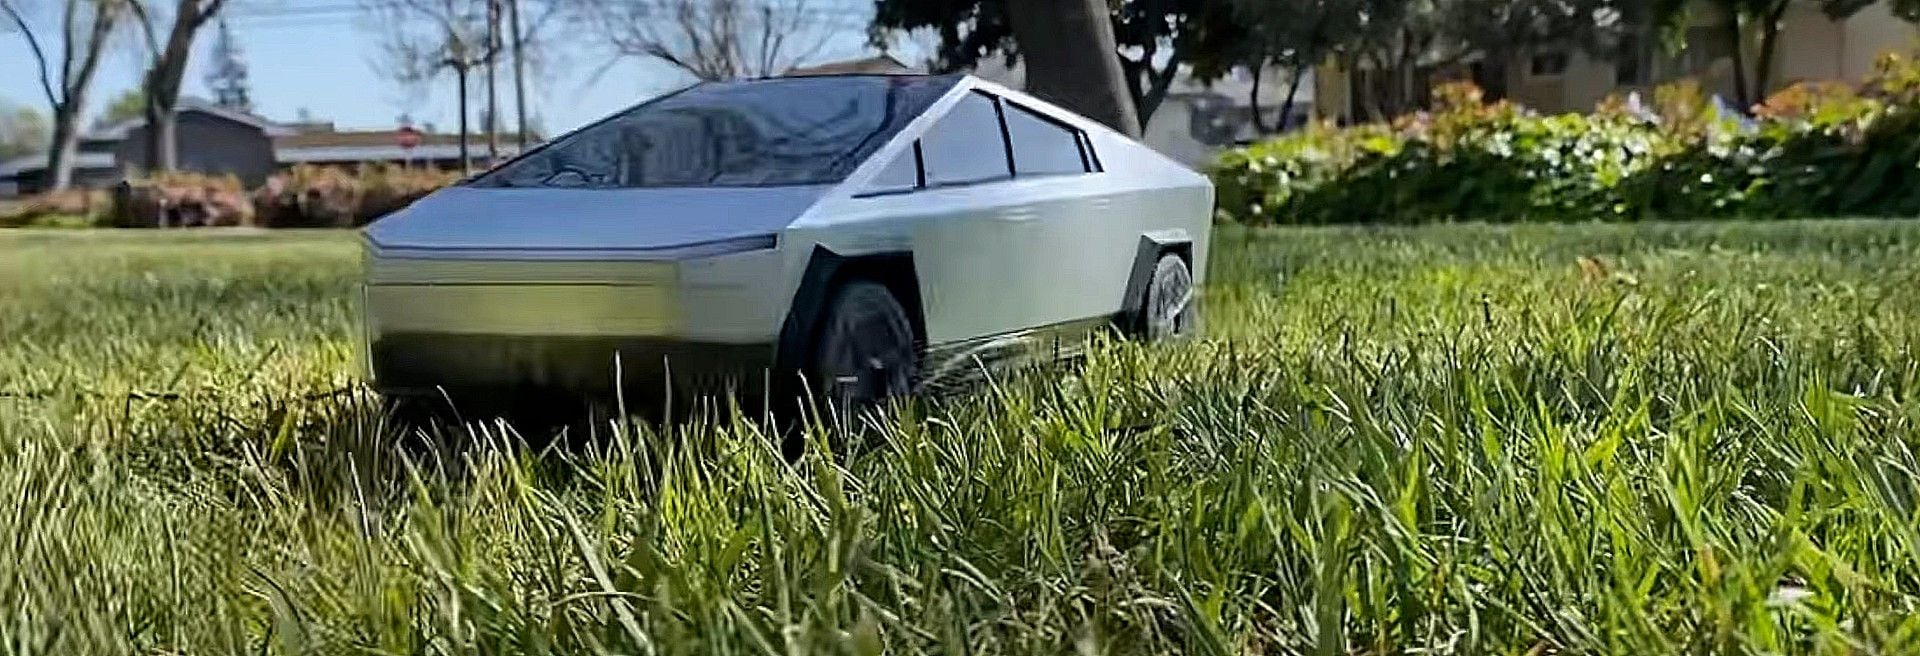 Hot Wheels 1:10 Scale R/C Tesla Cybertruck hangs out in some grass.